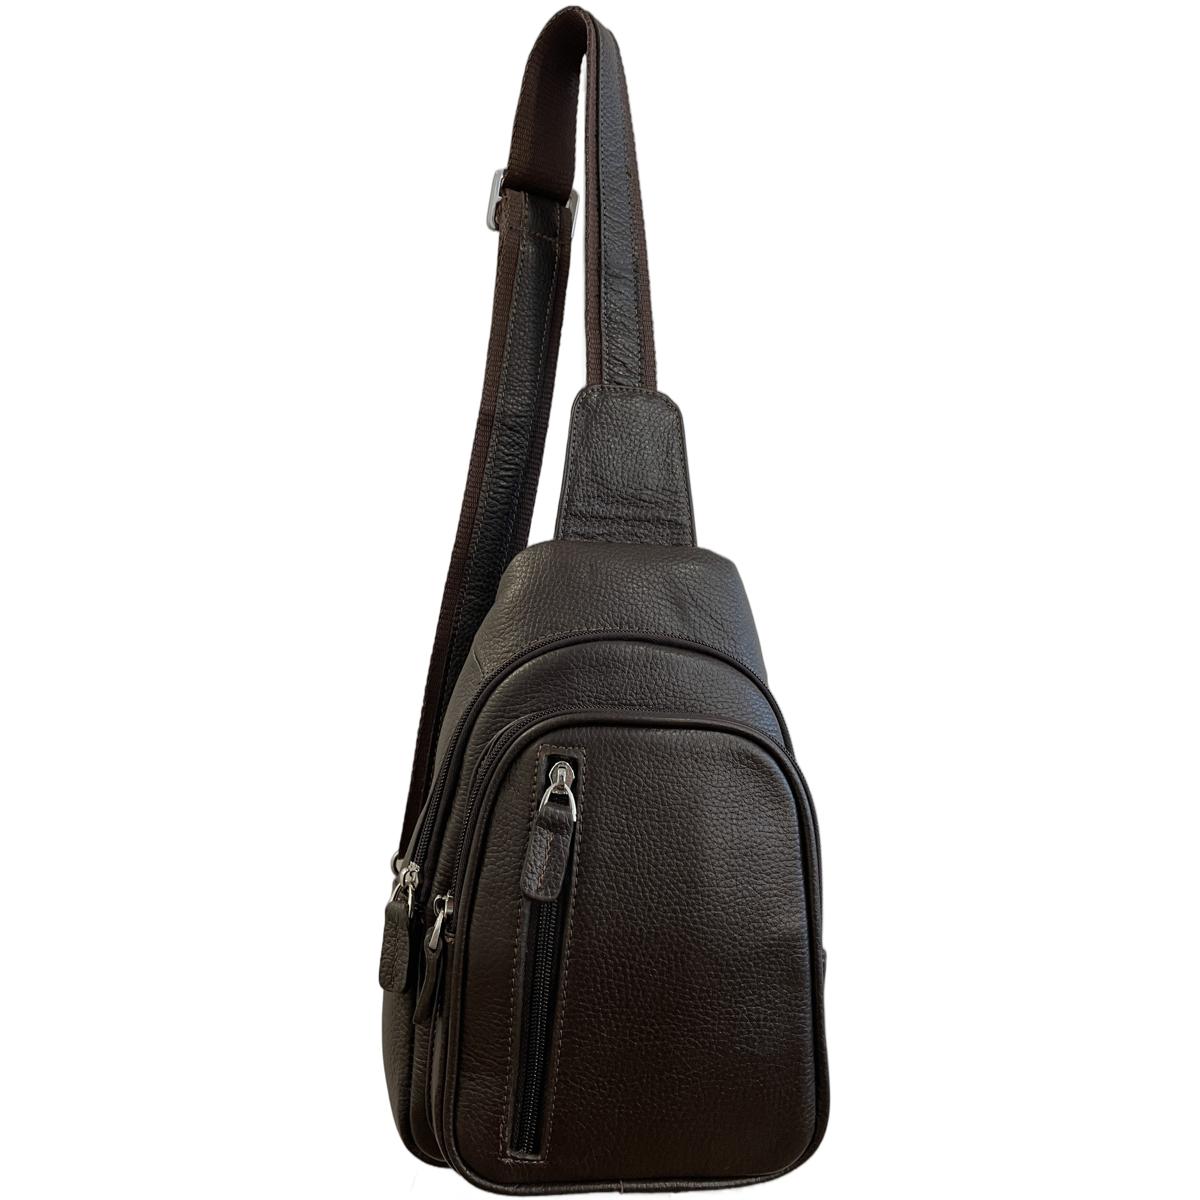 LeatherLuxe - Dark Brown Leather Unisex Sling Bag Shoulder Crossbody